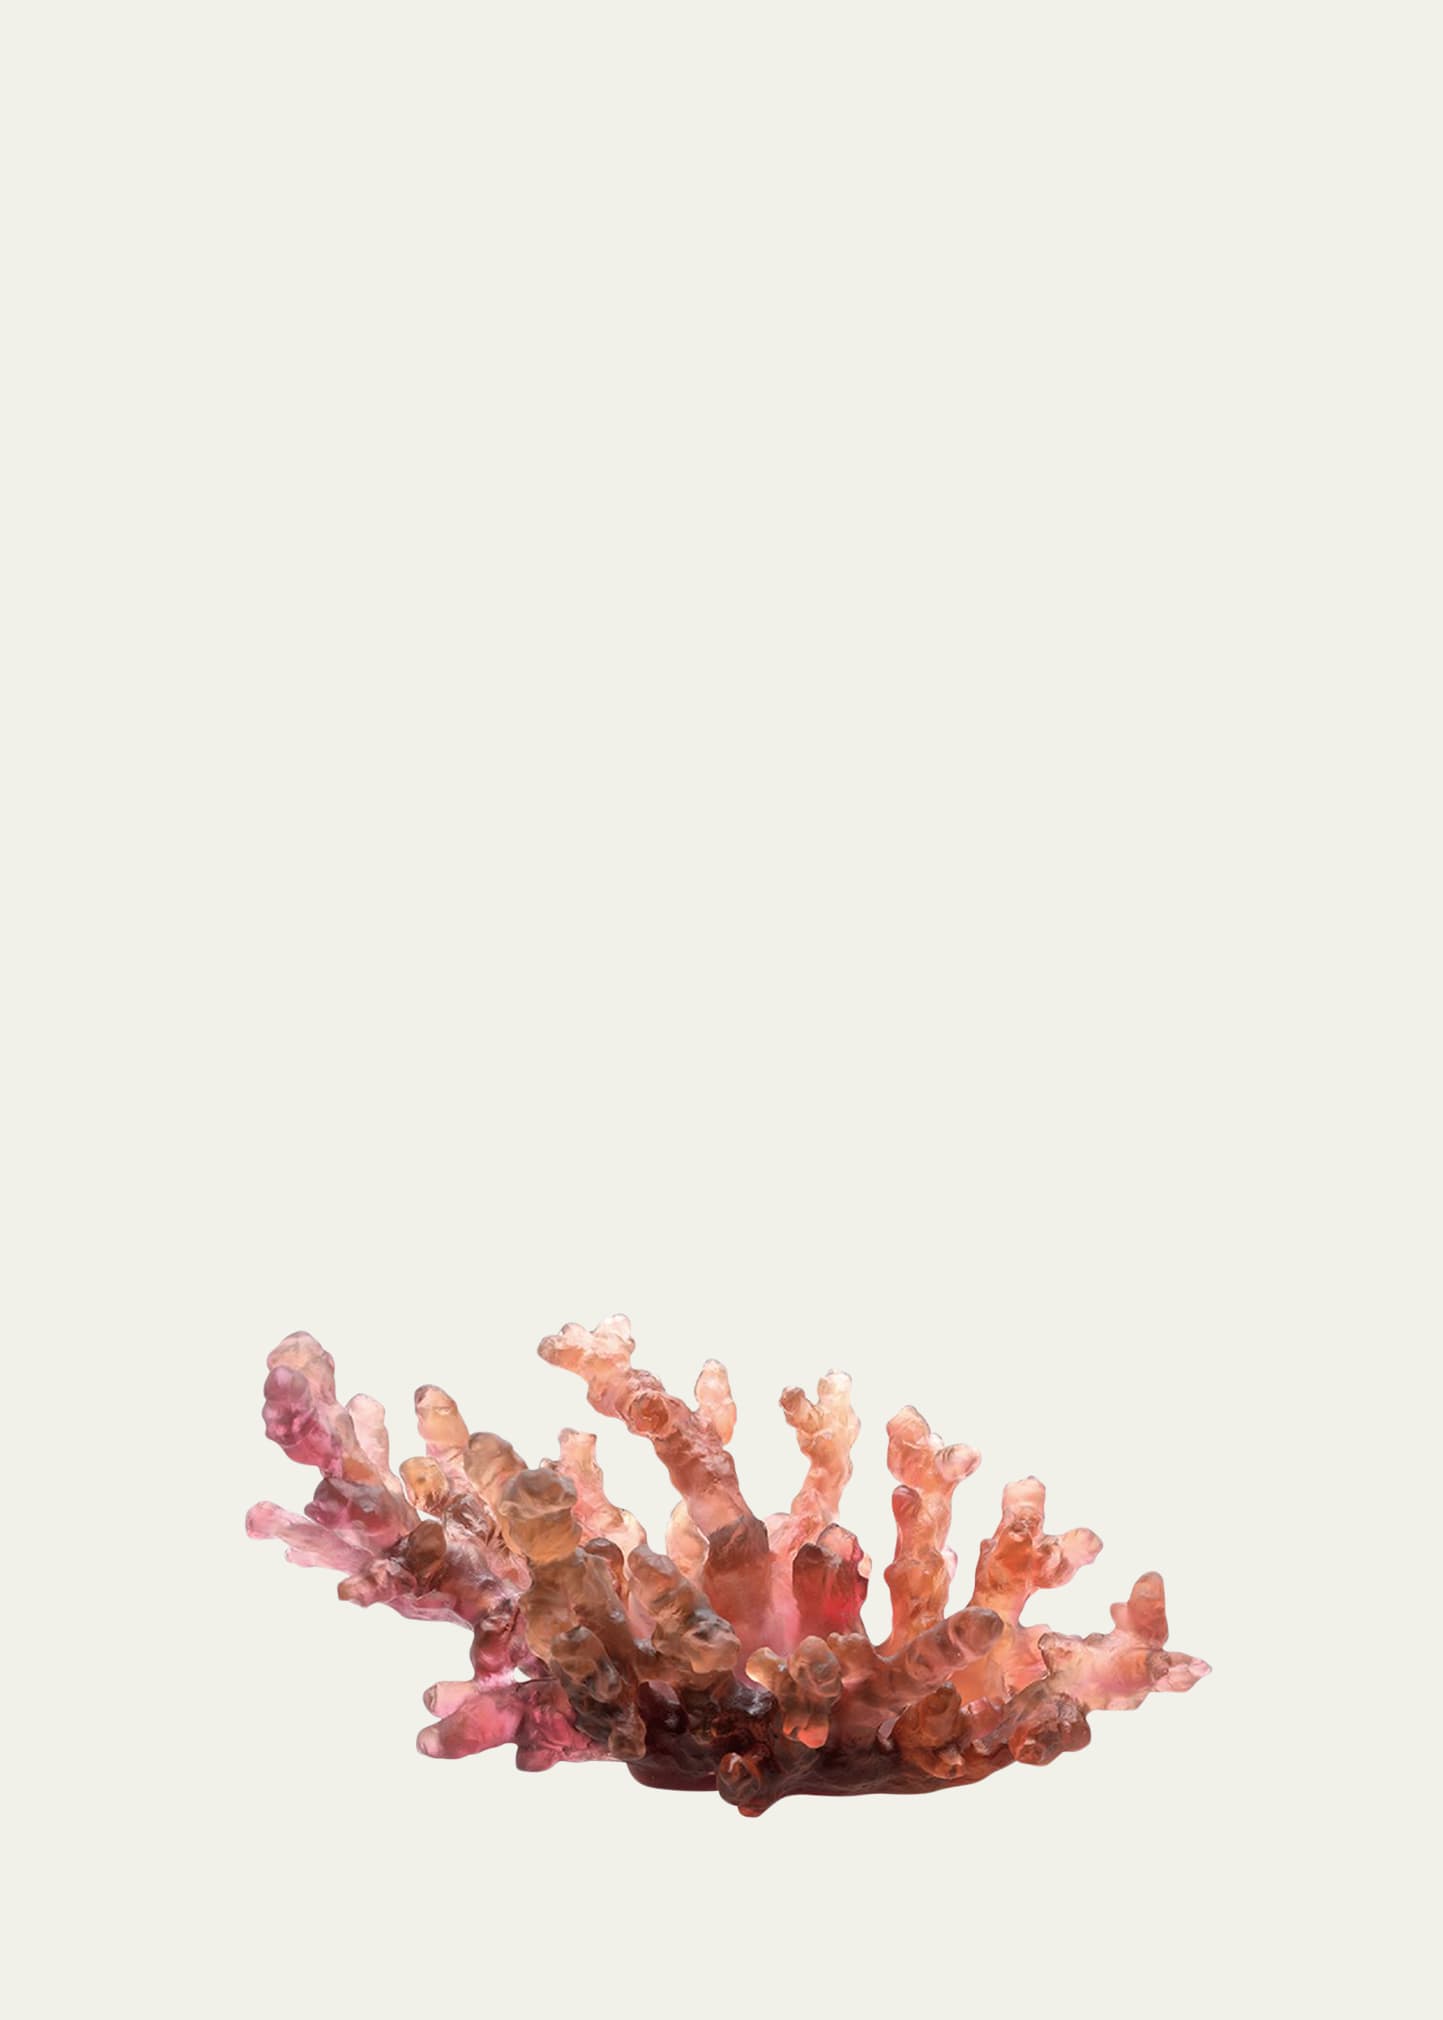 Coral Sea Medium Bowl, Amber/Red